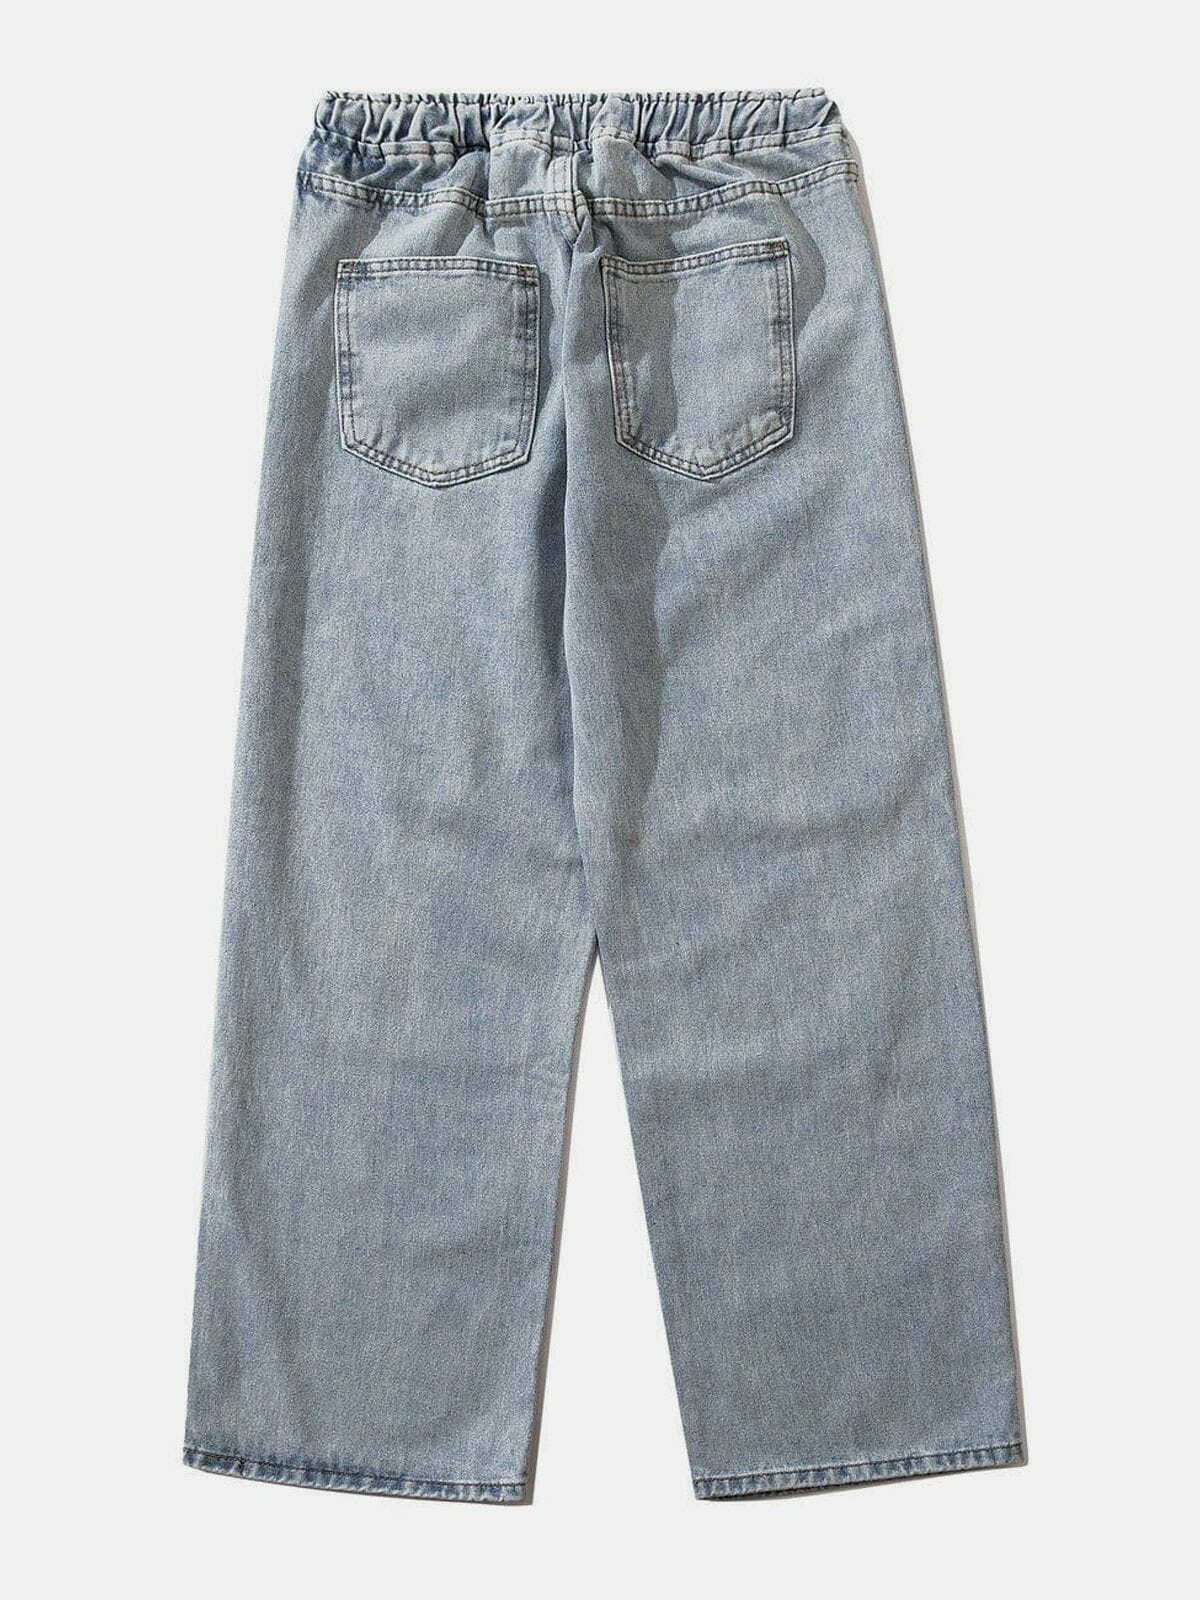 y2k printed heart jeans retro chic streetwear 7619